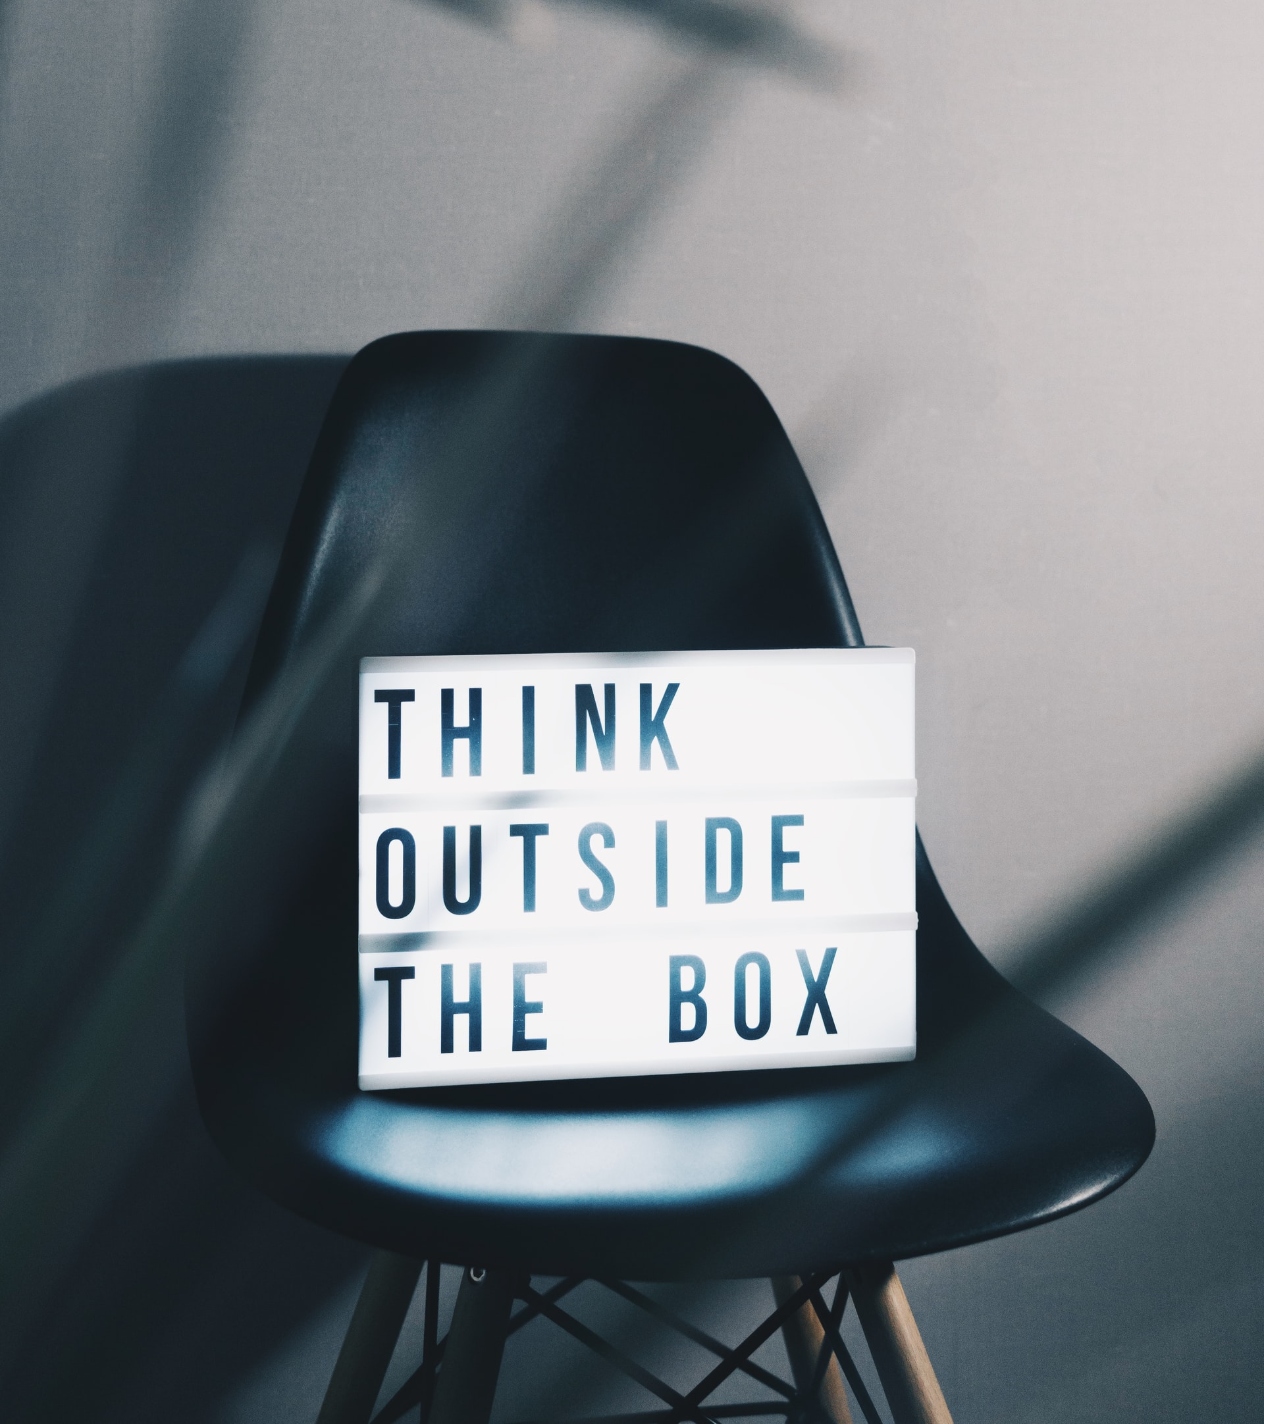 I en sort stol står der en lysende boks med teksten "Think outside the box"